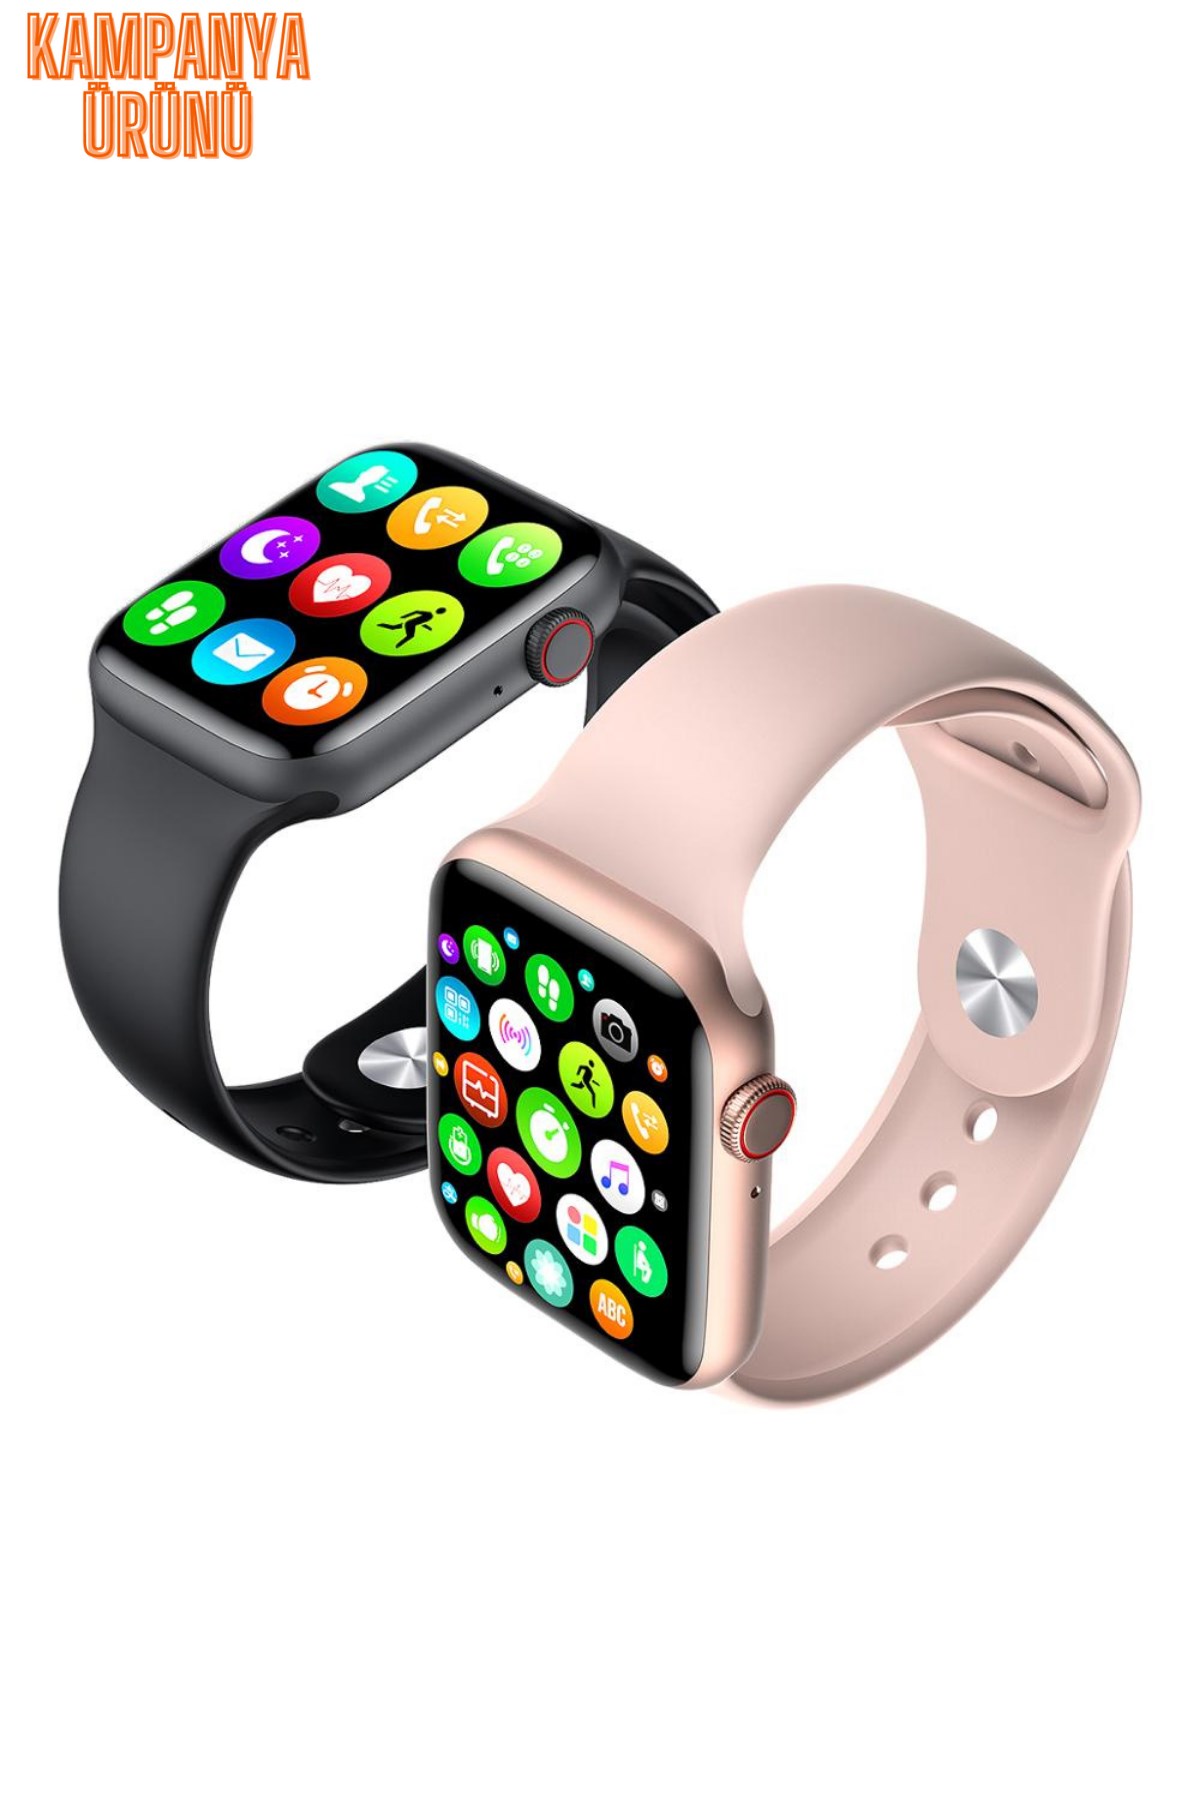 Watch 6 Pro Akıllı Saat Smart Watch ios ve Android destekler